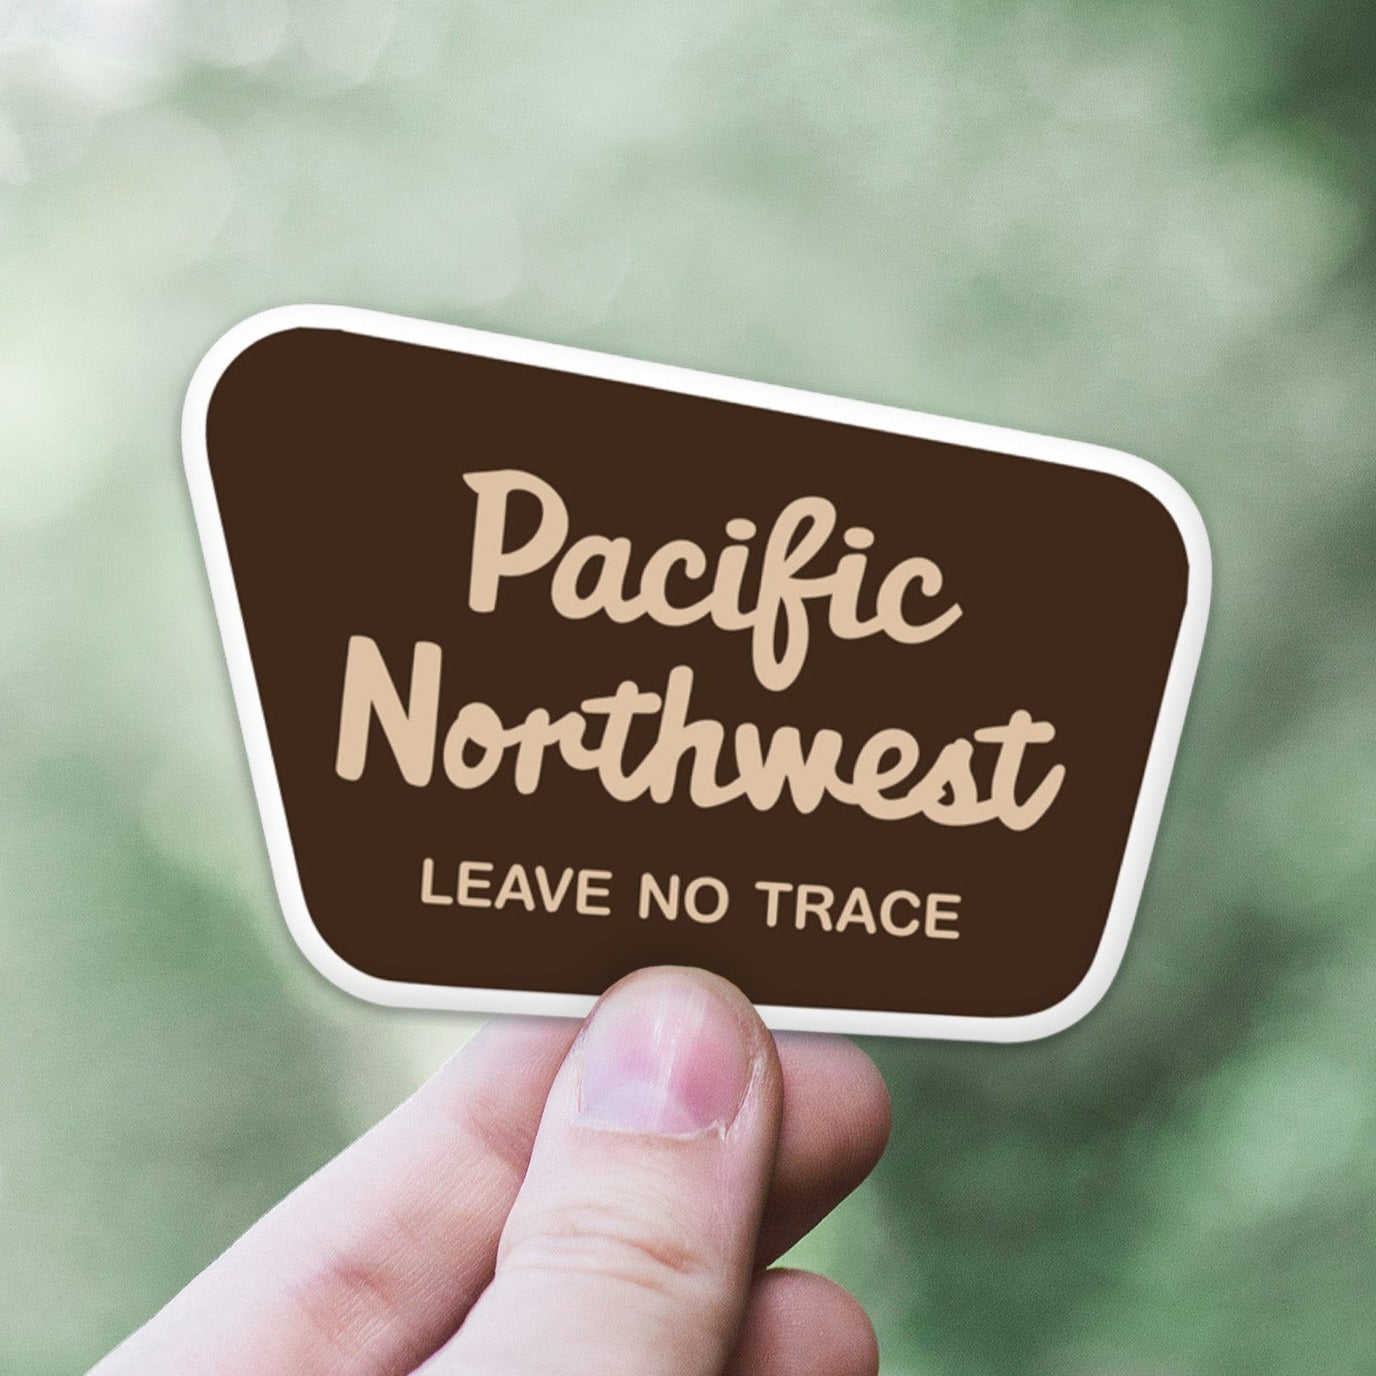 Pacific Northwest National Forest Sticker